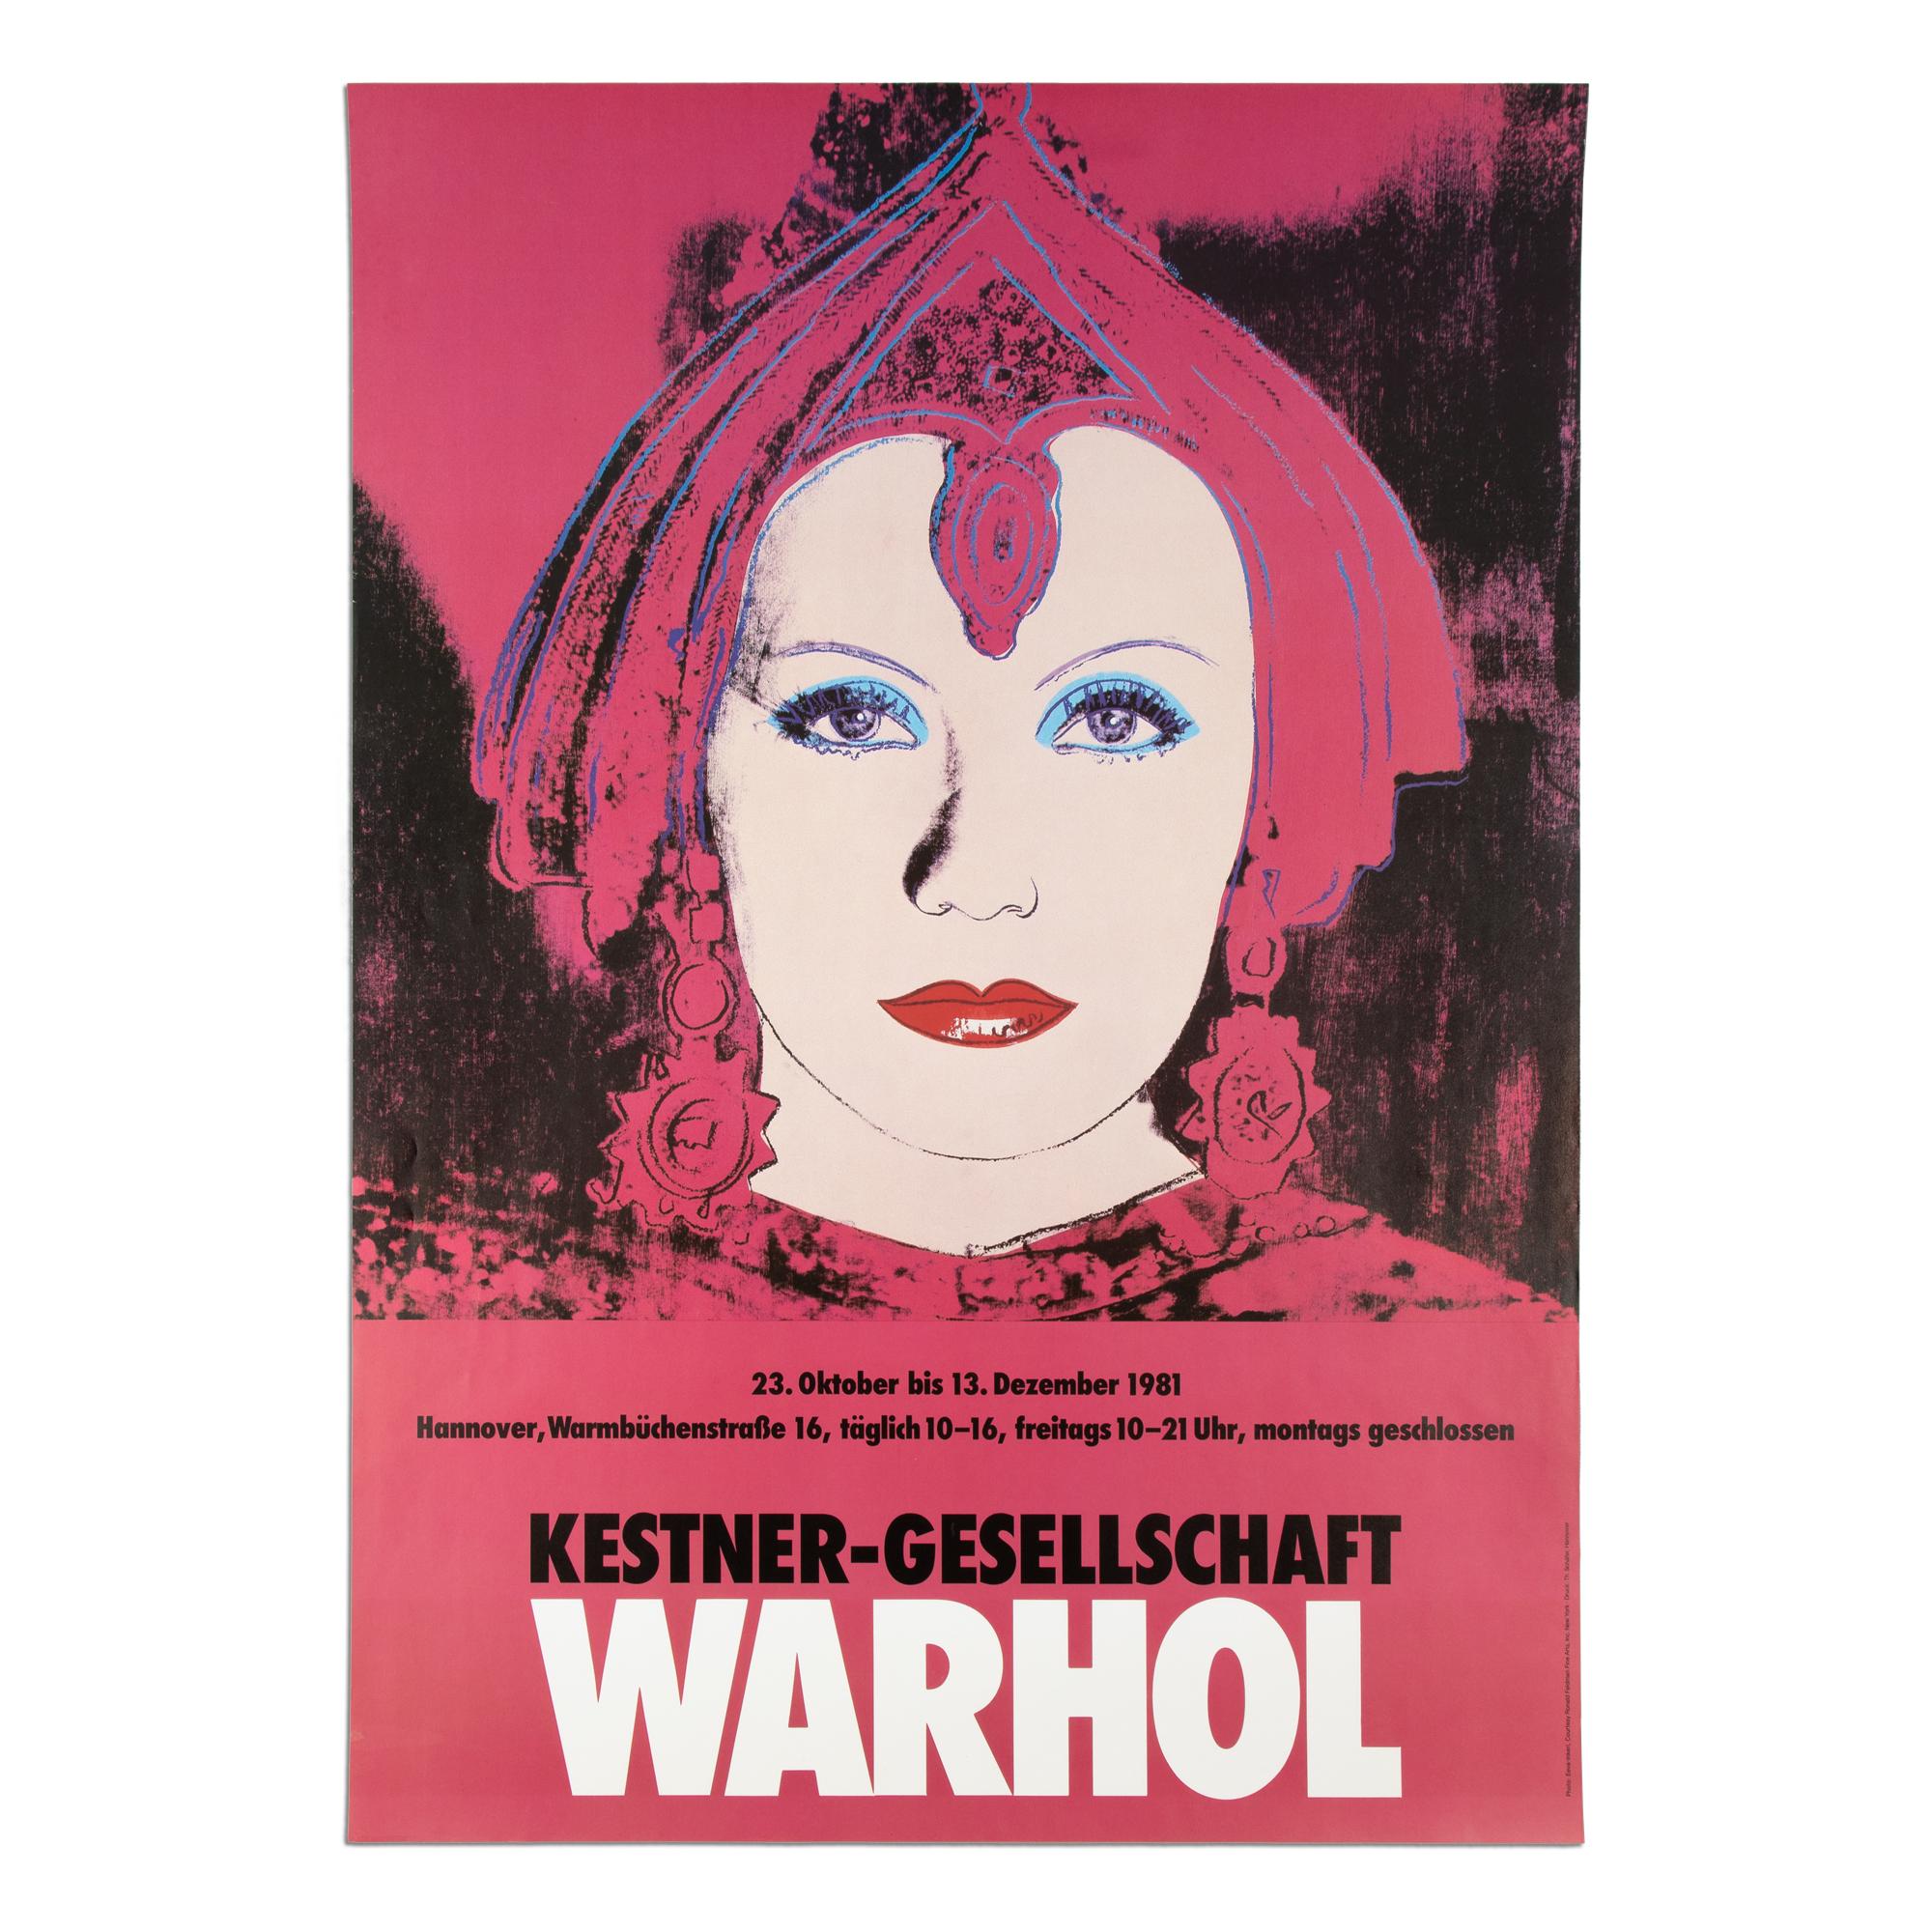 (after) Andy Warhol Portrait Print - Andy Warhol, The Star - Kestner-Gesellschaft, Exhibition Poster, Pop Art Print